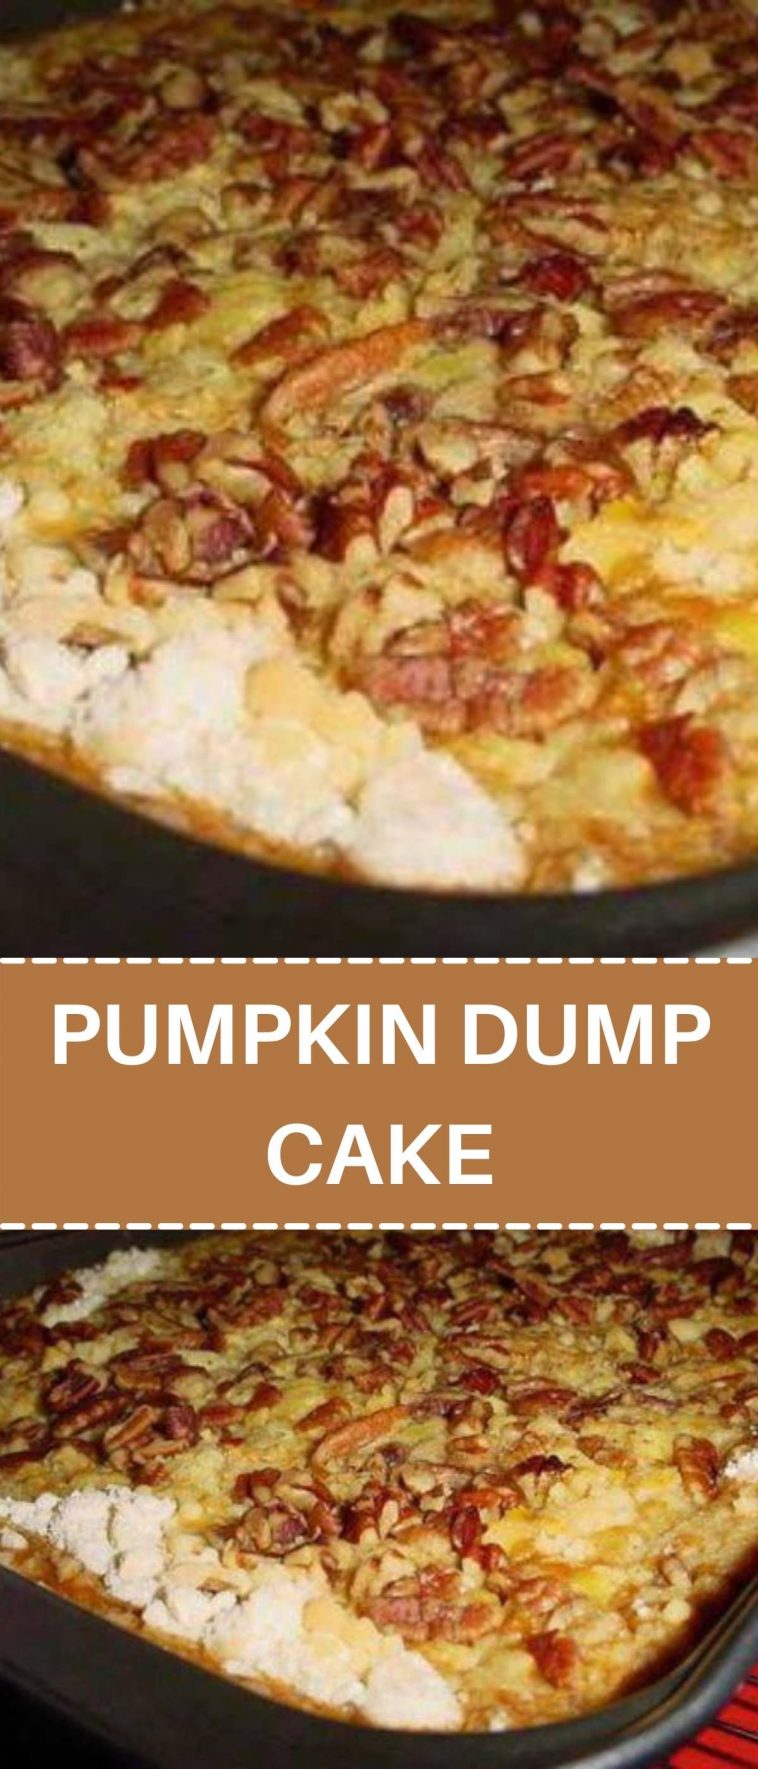 PUMPKIN DUMP CAKE